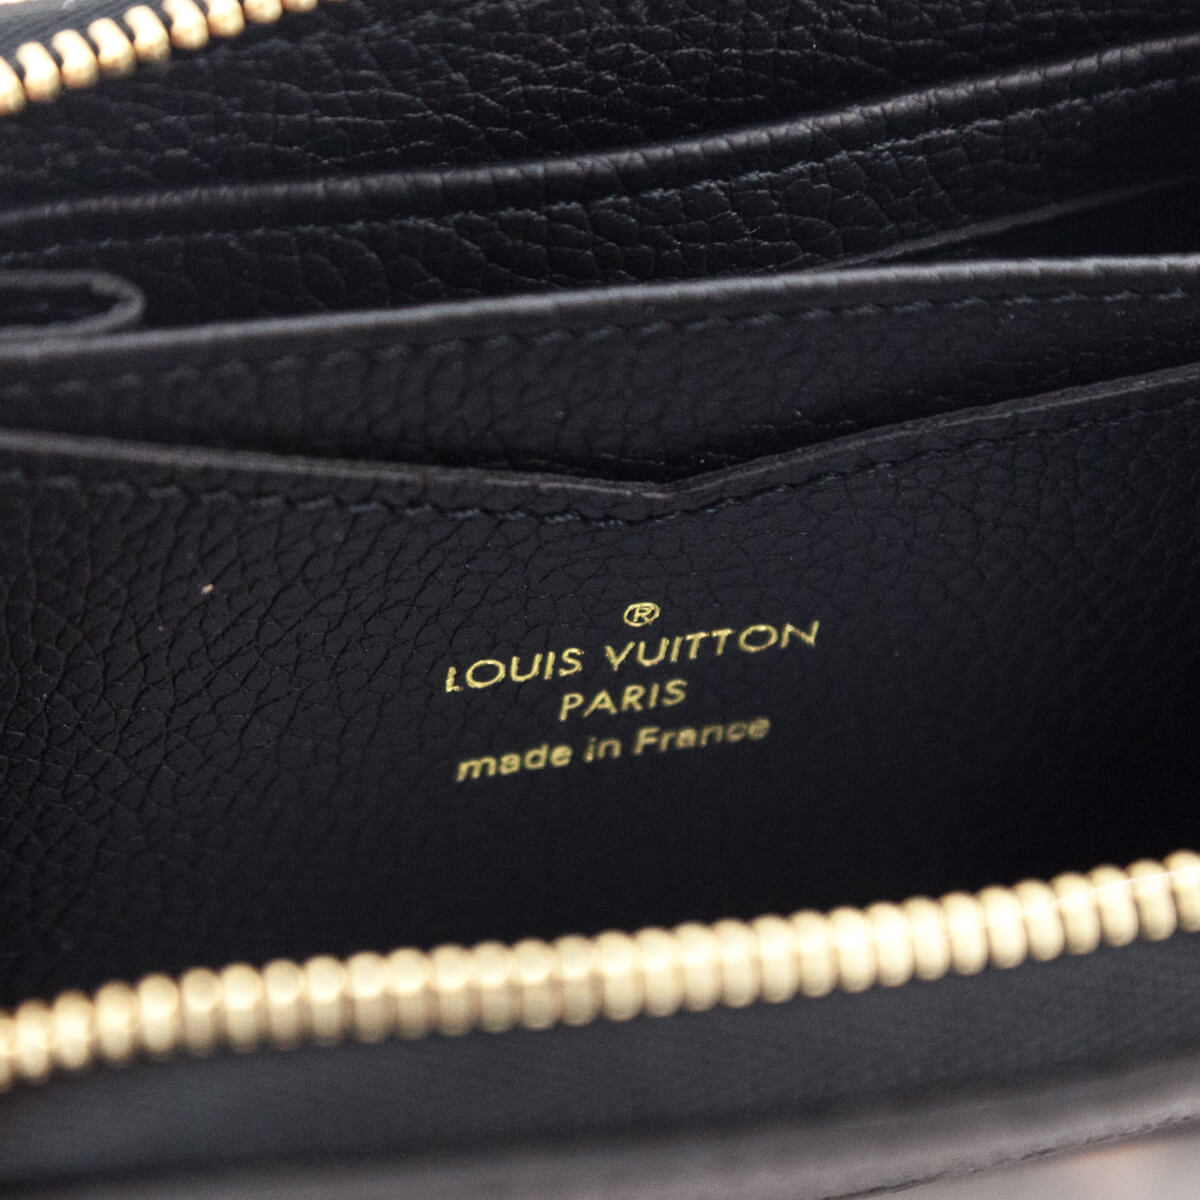 Shop Louis Vuitton ZIPPY COIN PURSE Zippy coin purse (M60067) by babybbb